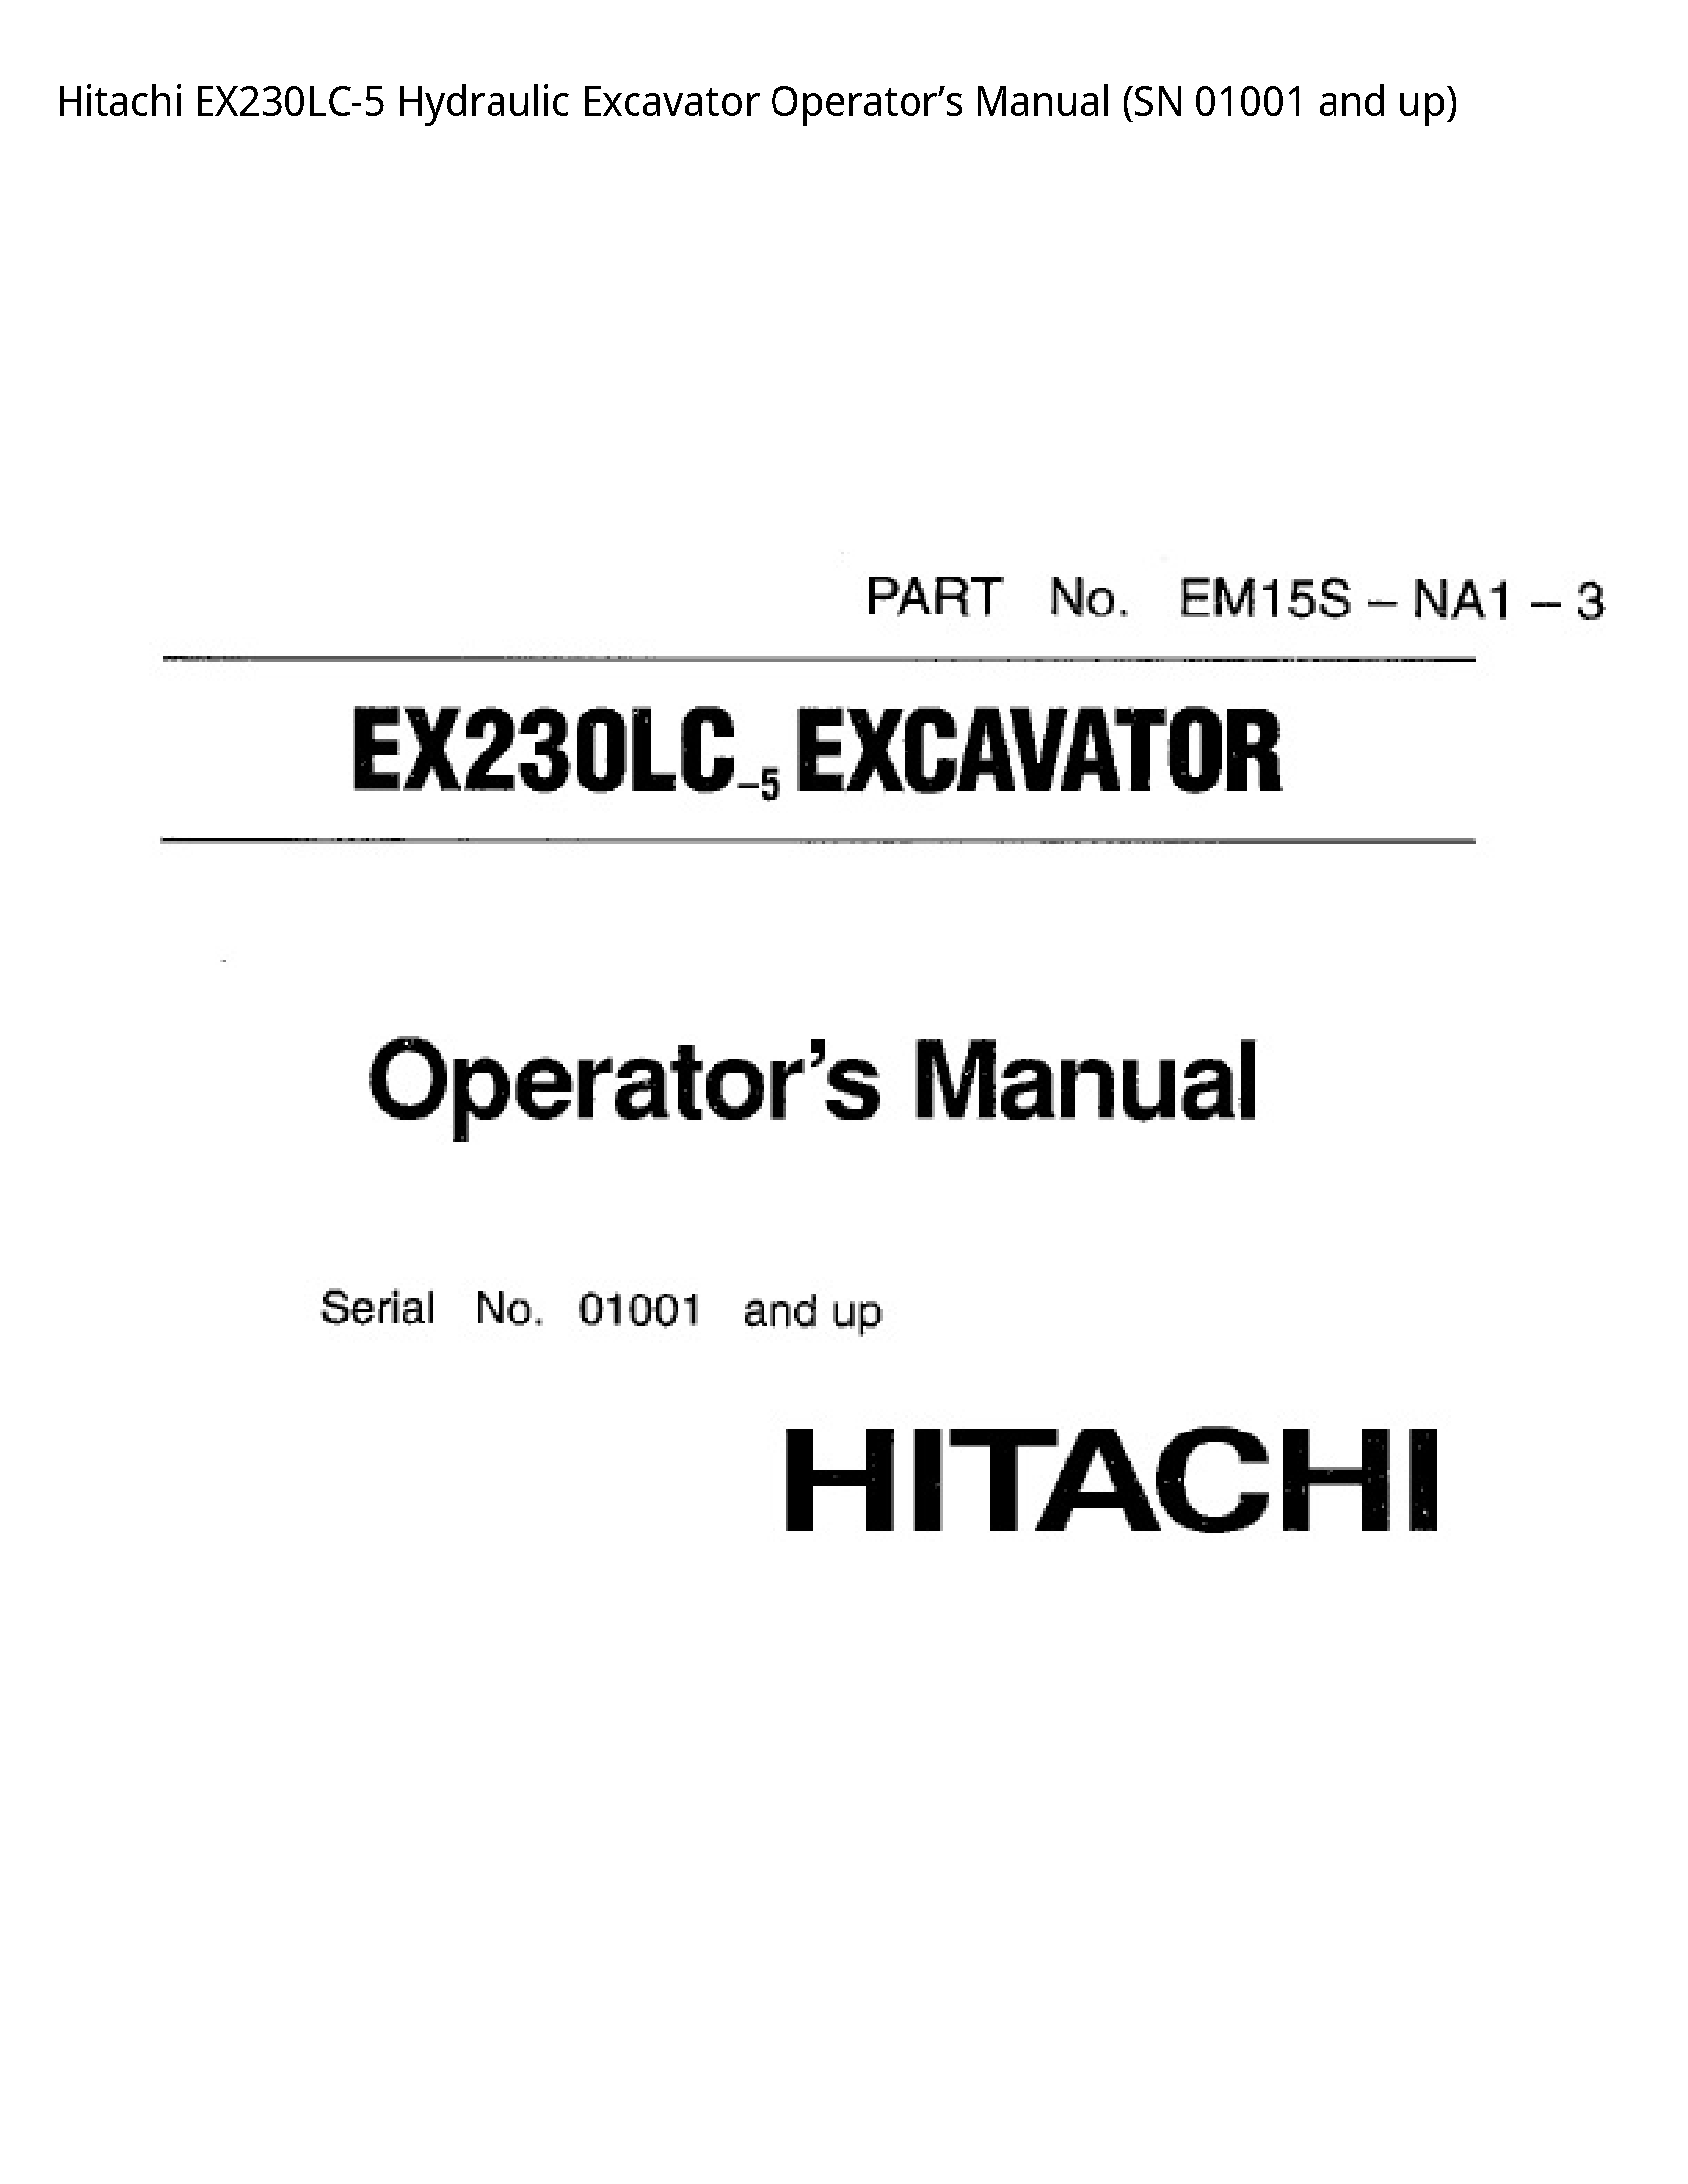 Hitachi EX230LC-5 Hydraulic Excavator Operator’s manual